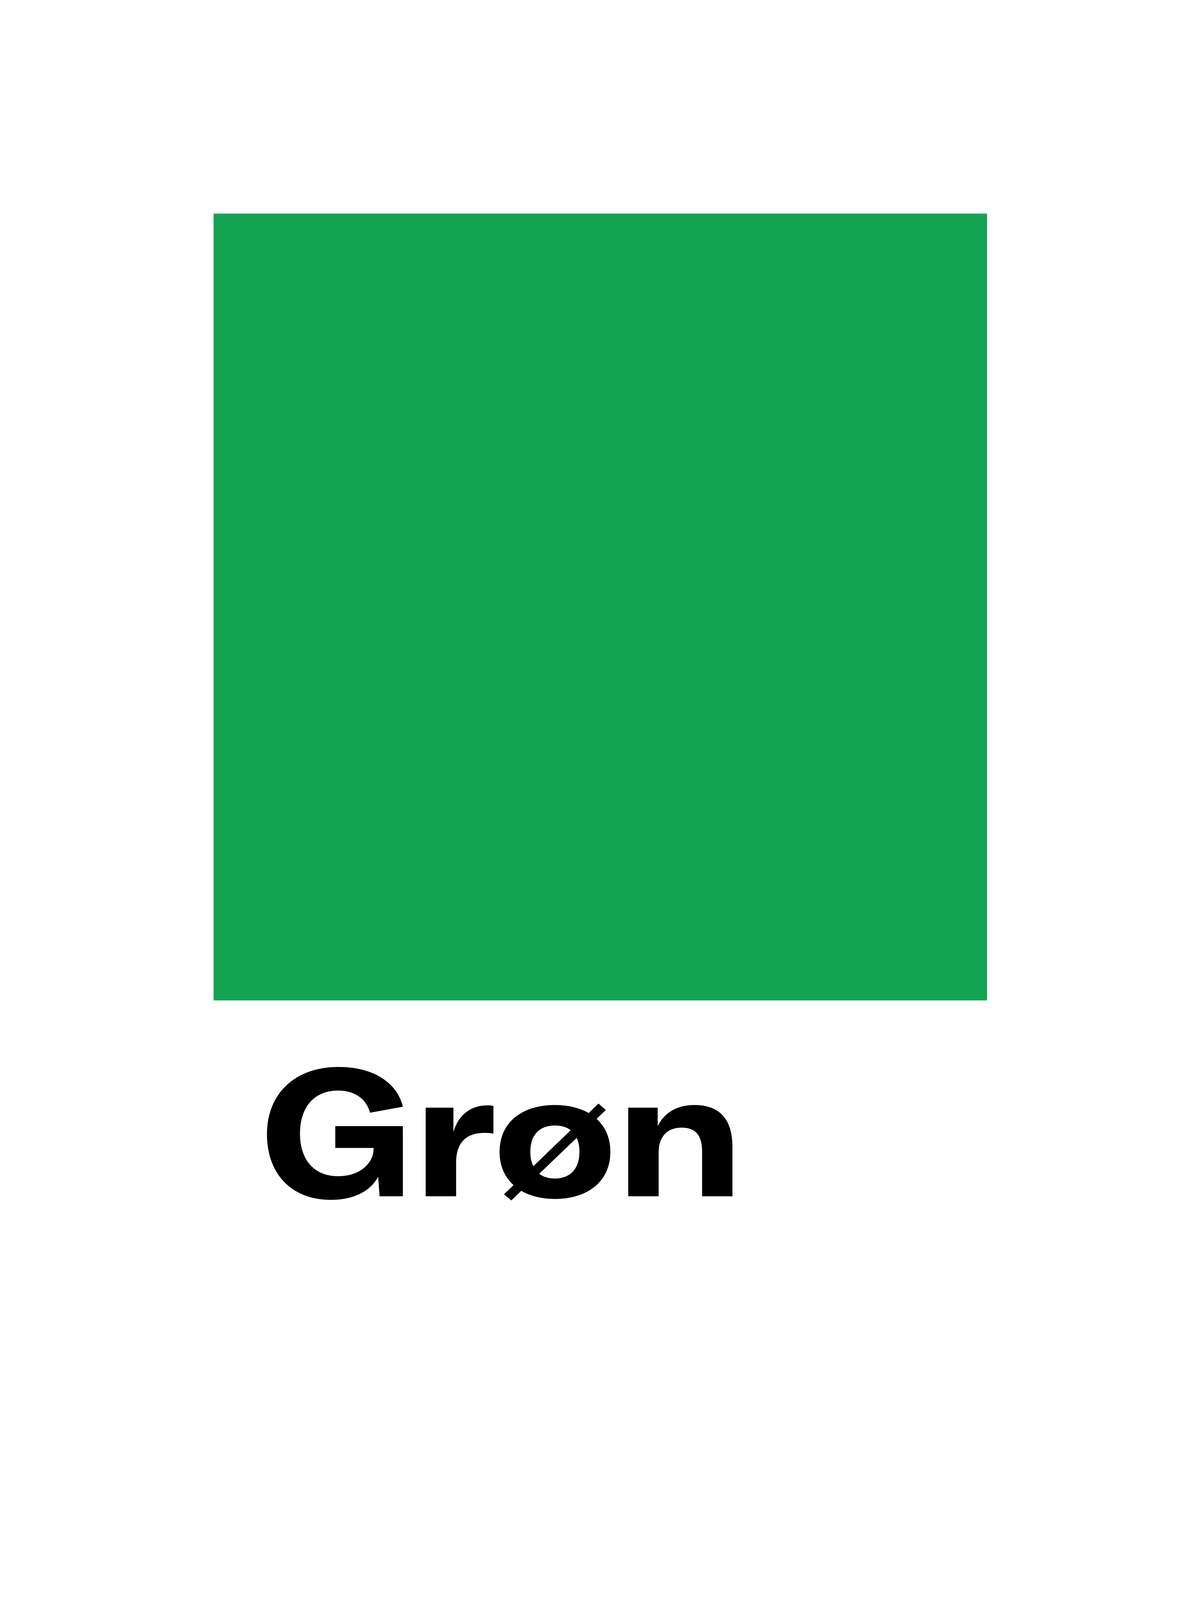 gron negativ rgb